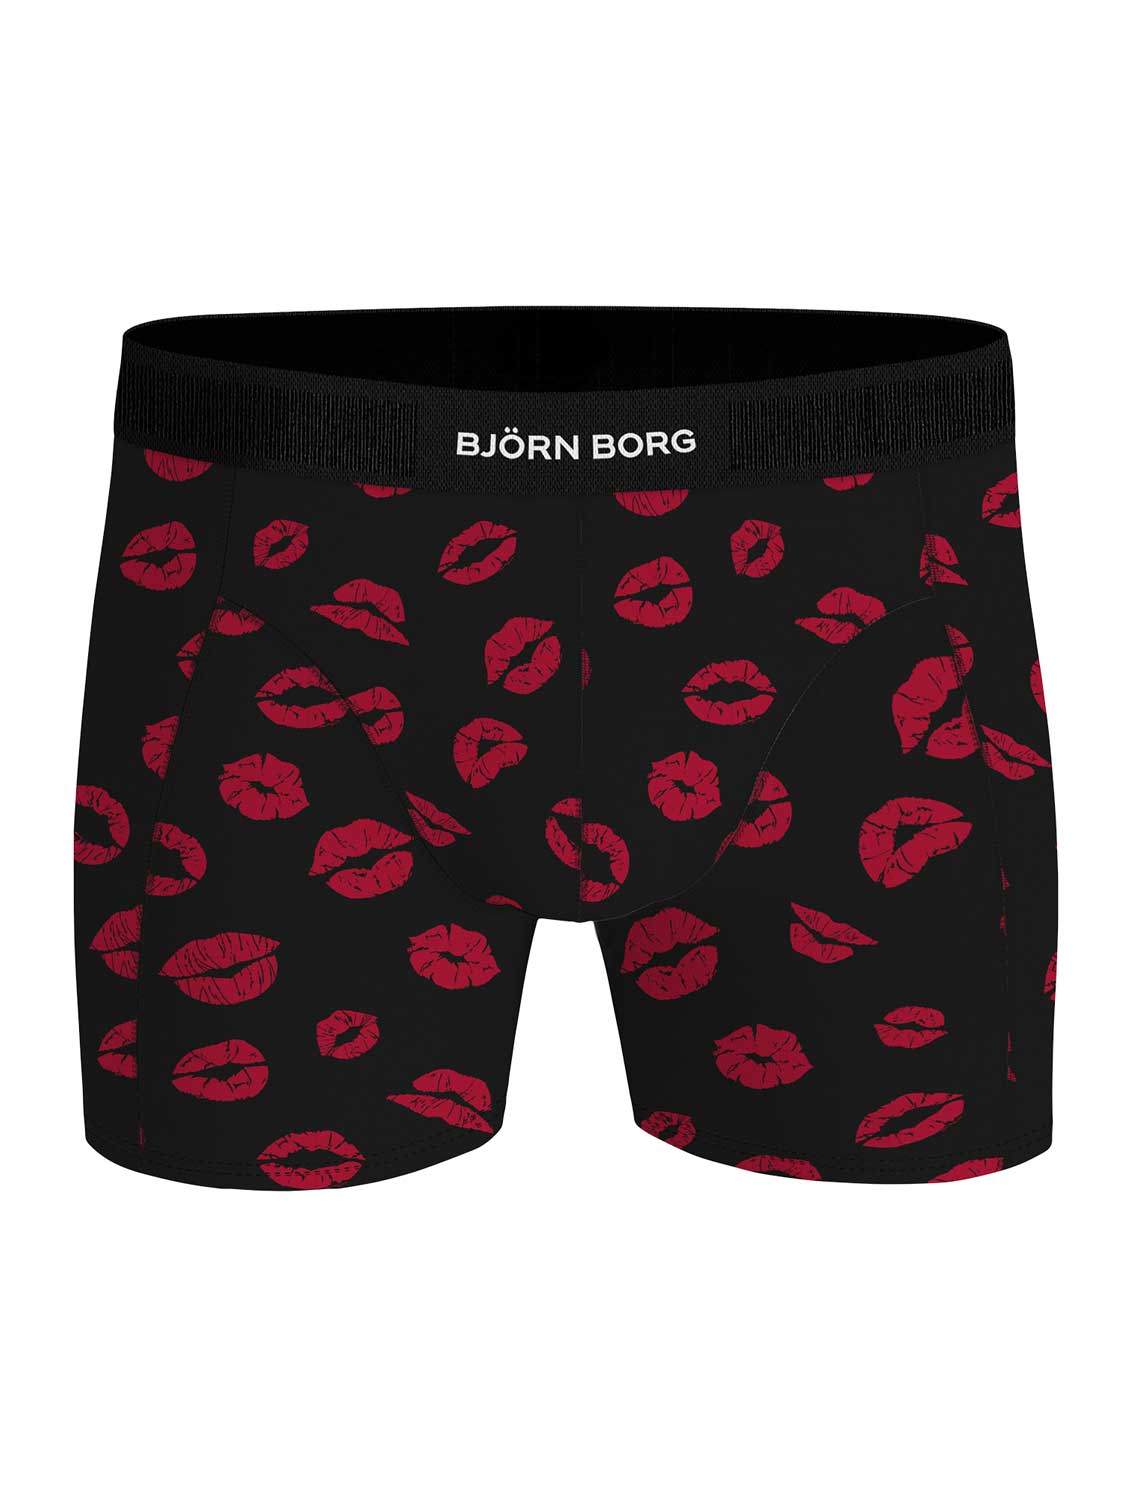 Björn Borg Cotton Stretch boxers - heren boxers normale lengte (1-pack) - zwart met rode kus - Maat: S